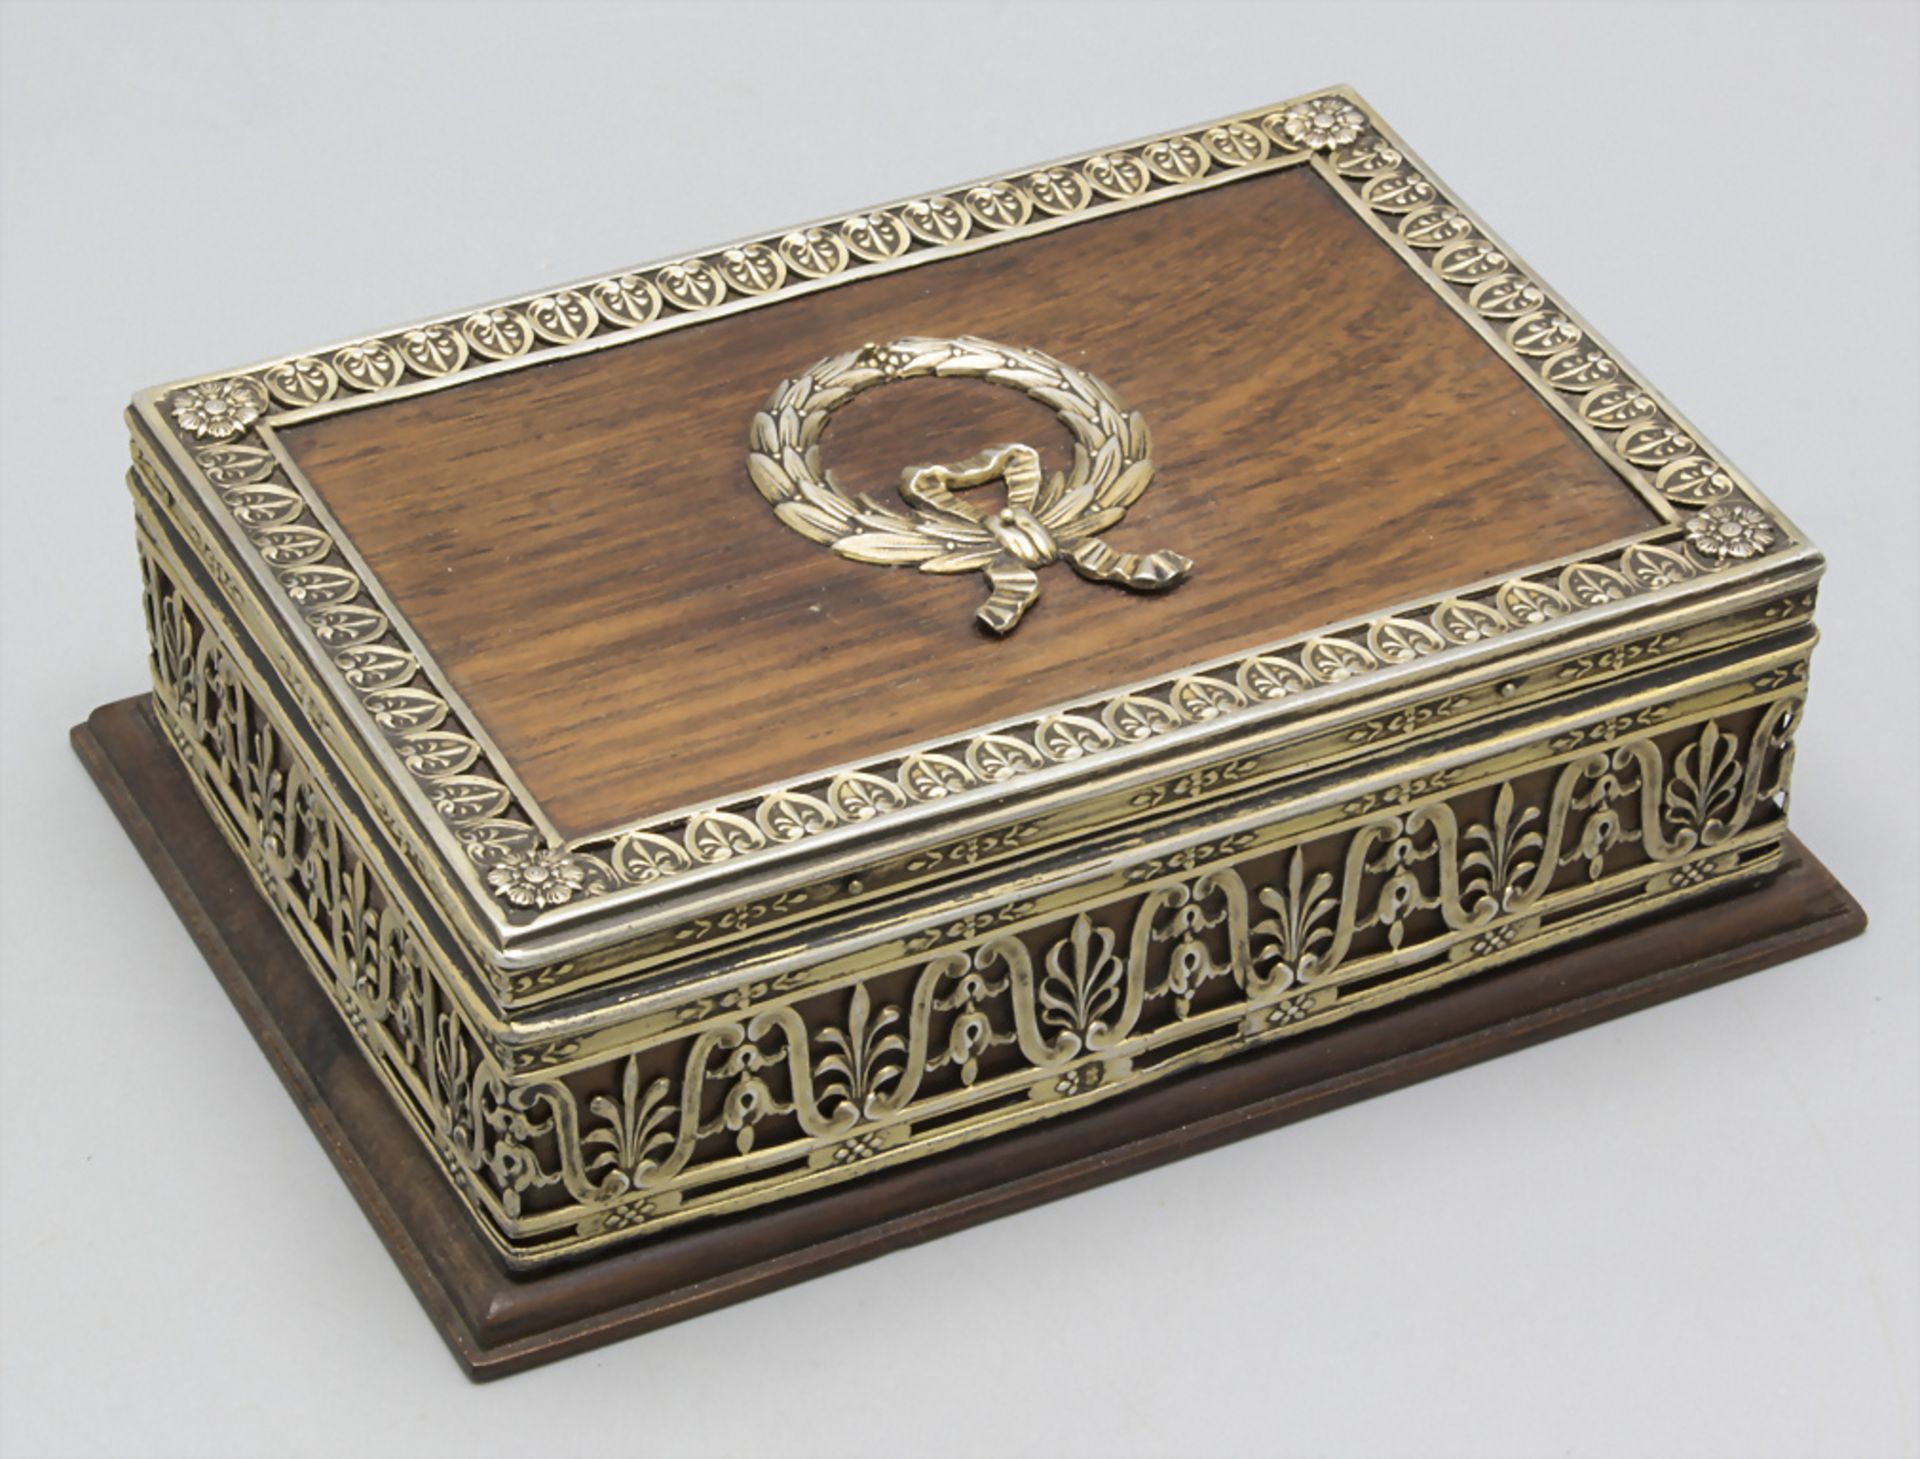 Holzschatulle mit Silbermontur / A wooden casket with silver mount, Emile Langlois, Paris, ...